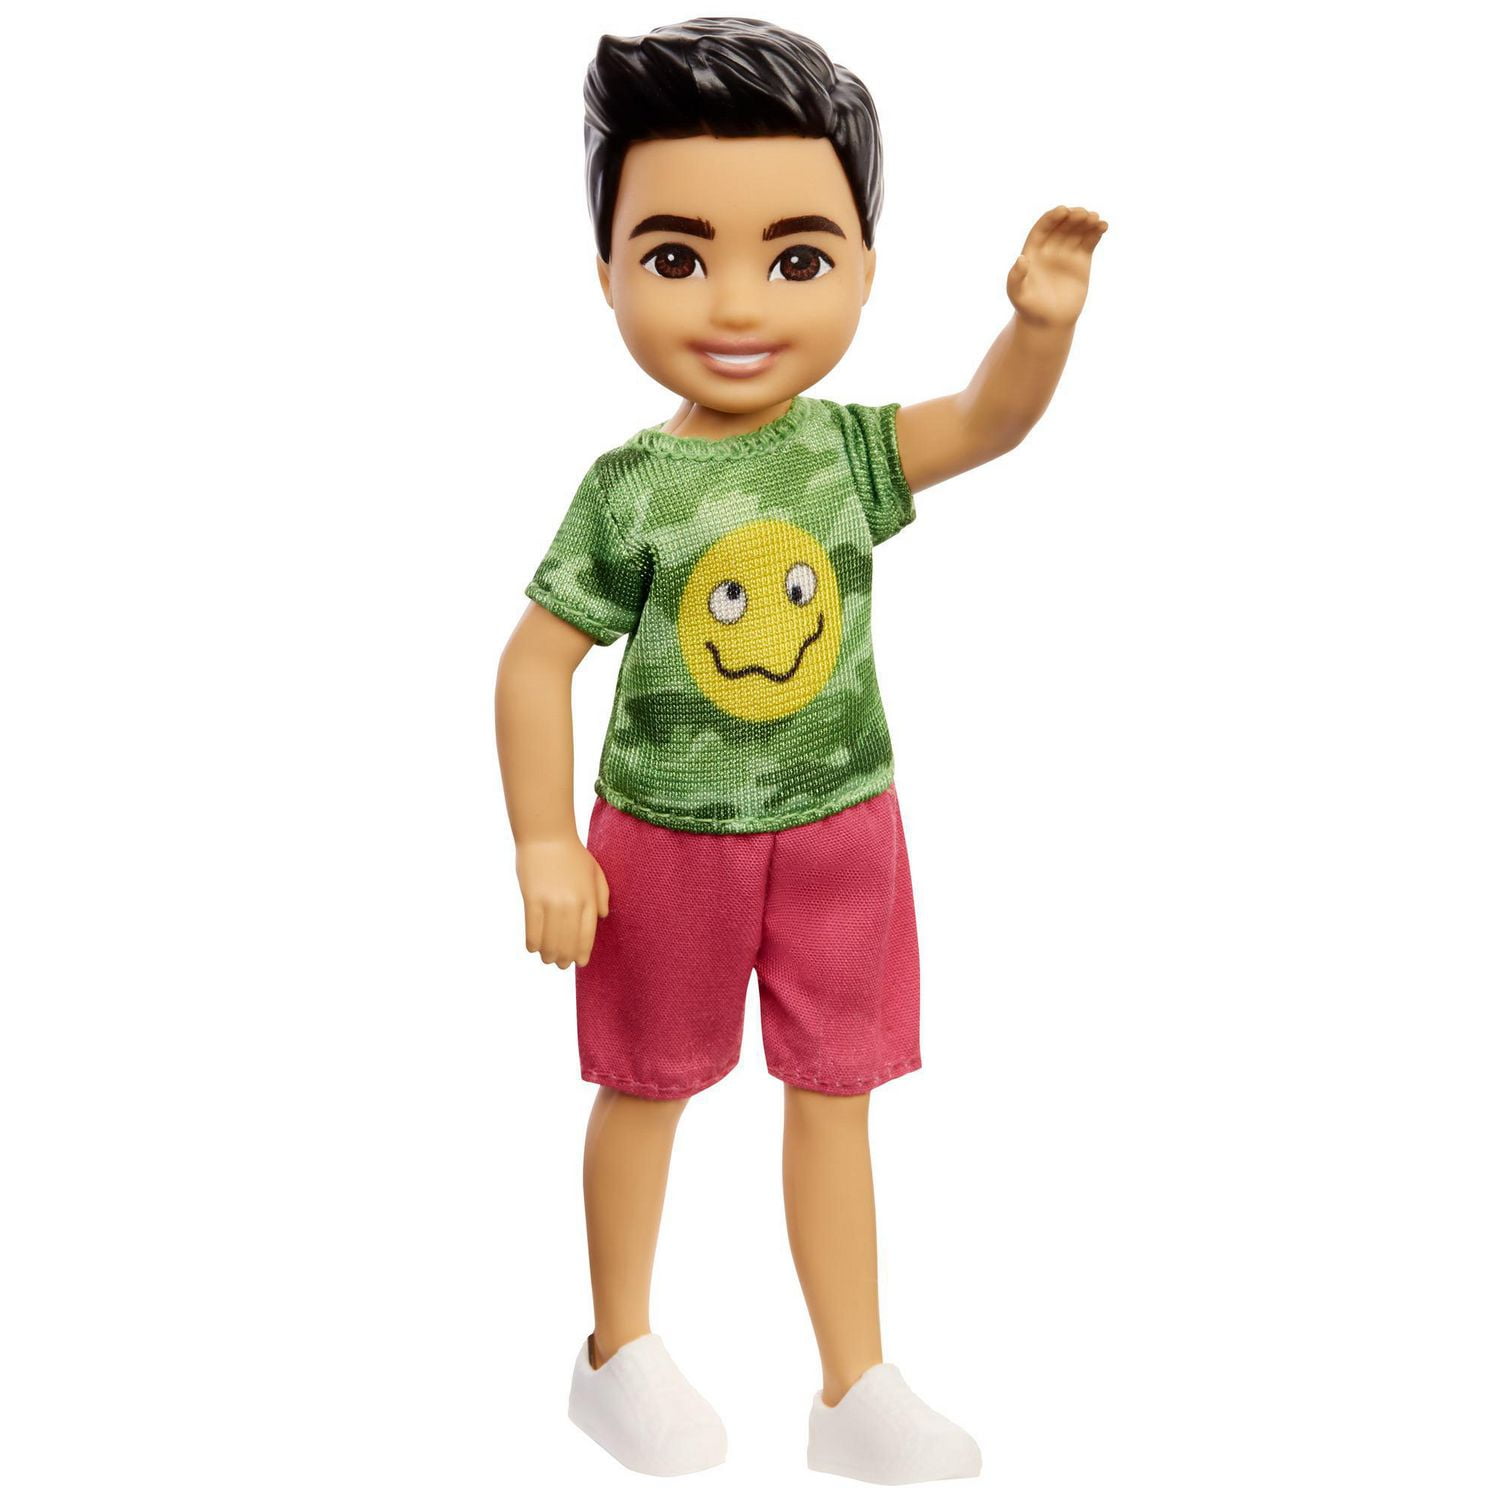 Barbie Chelsea Boy Doll (6-inch Brunette) Wearing Camo T-Shirt, Shorts